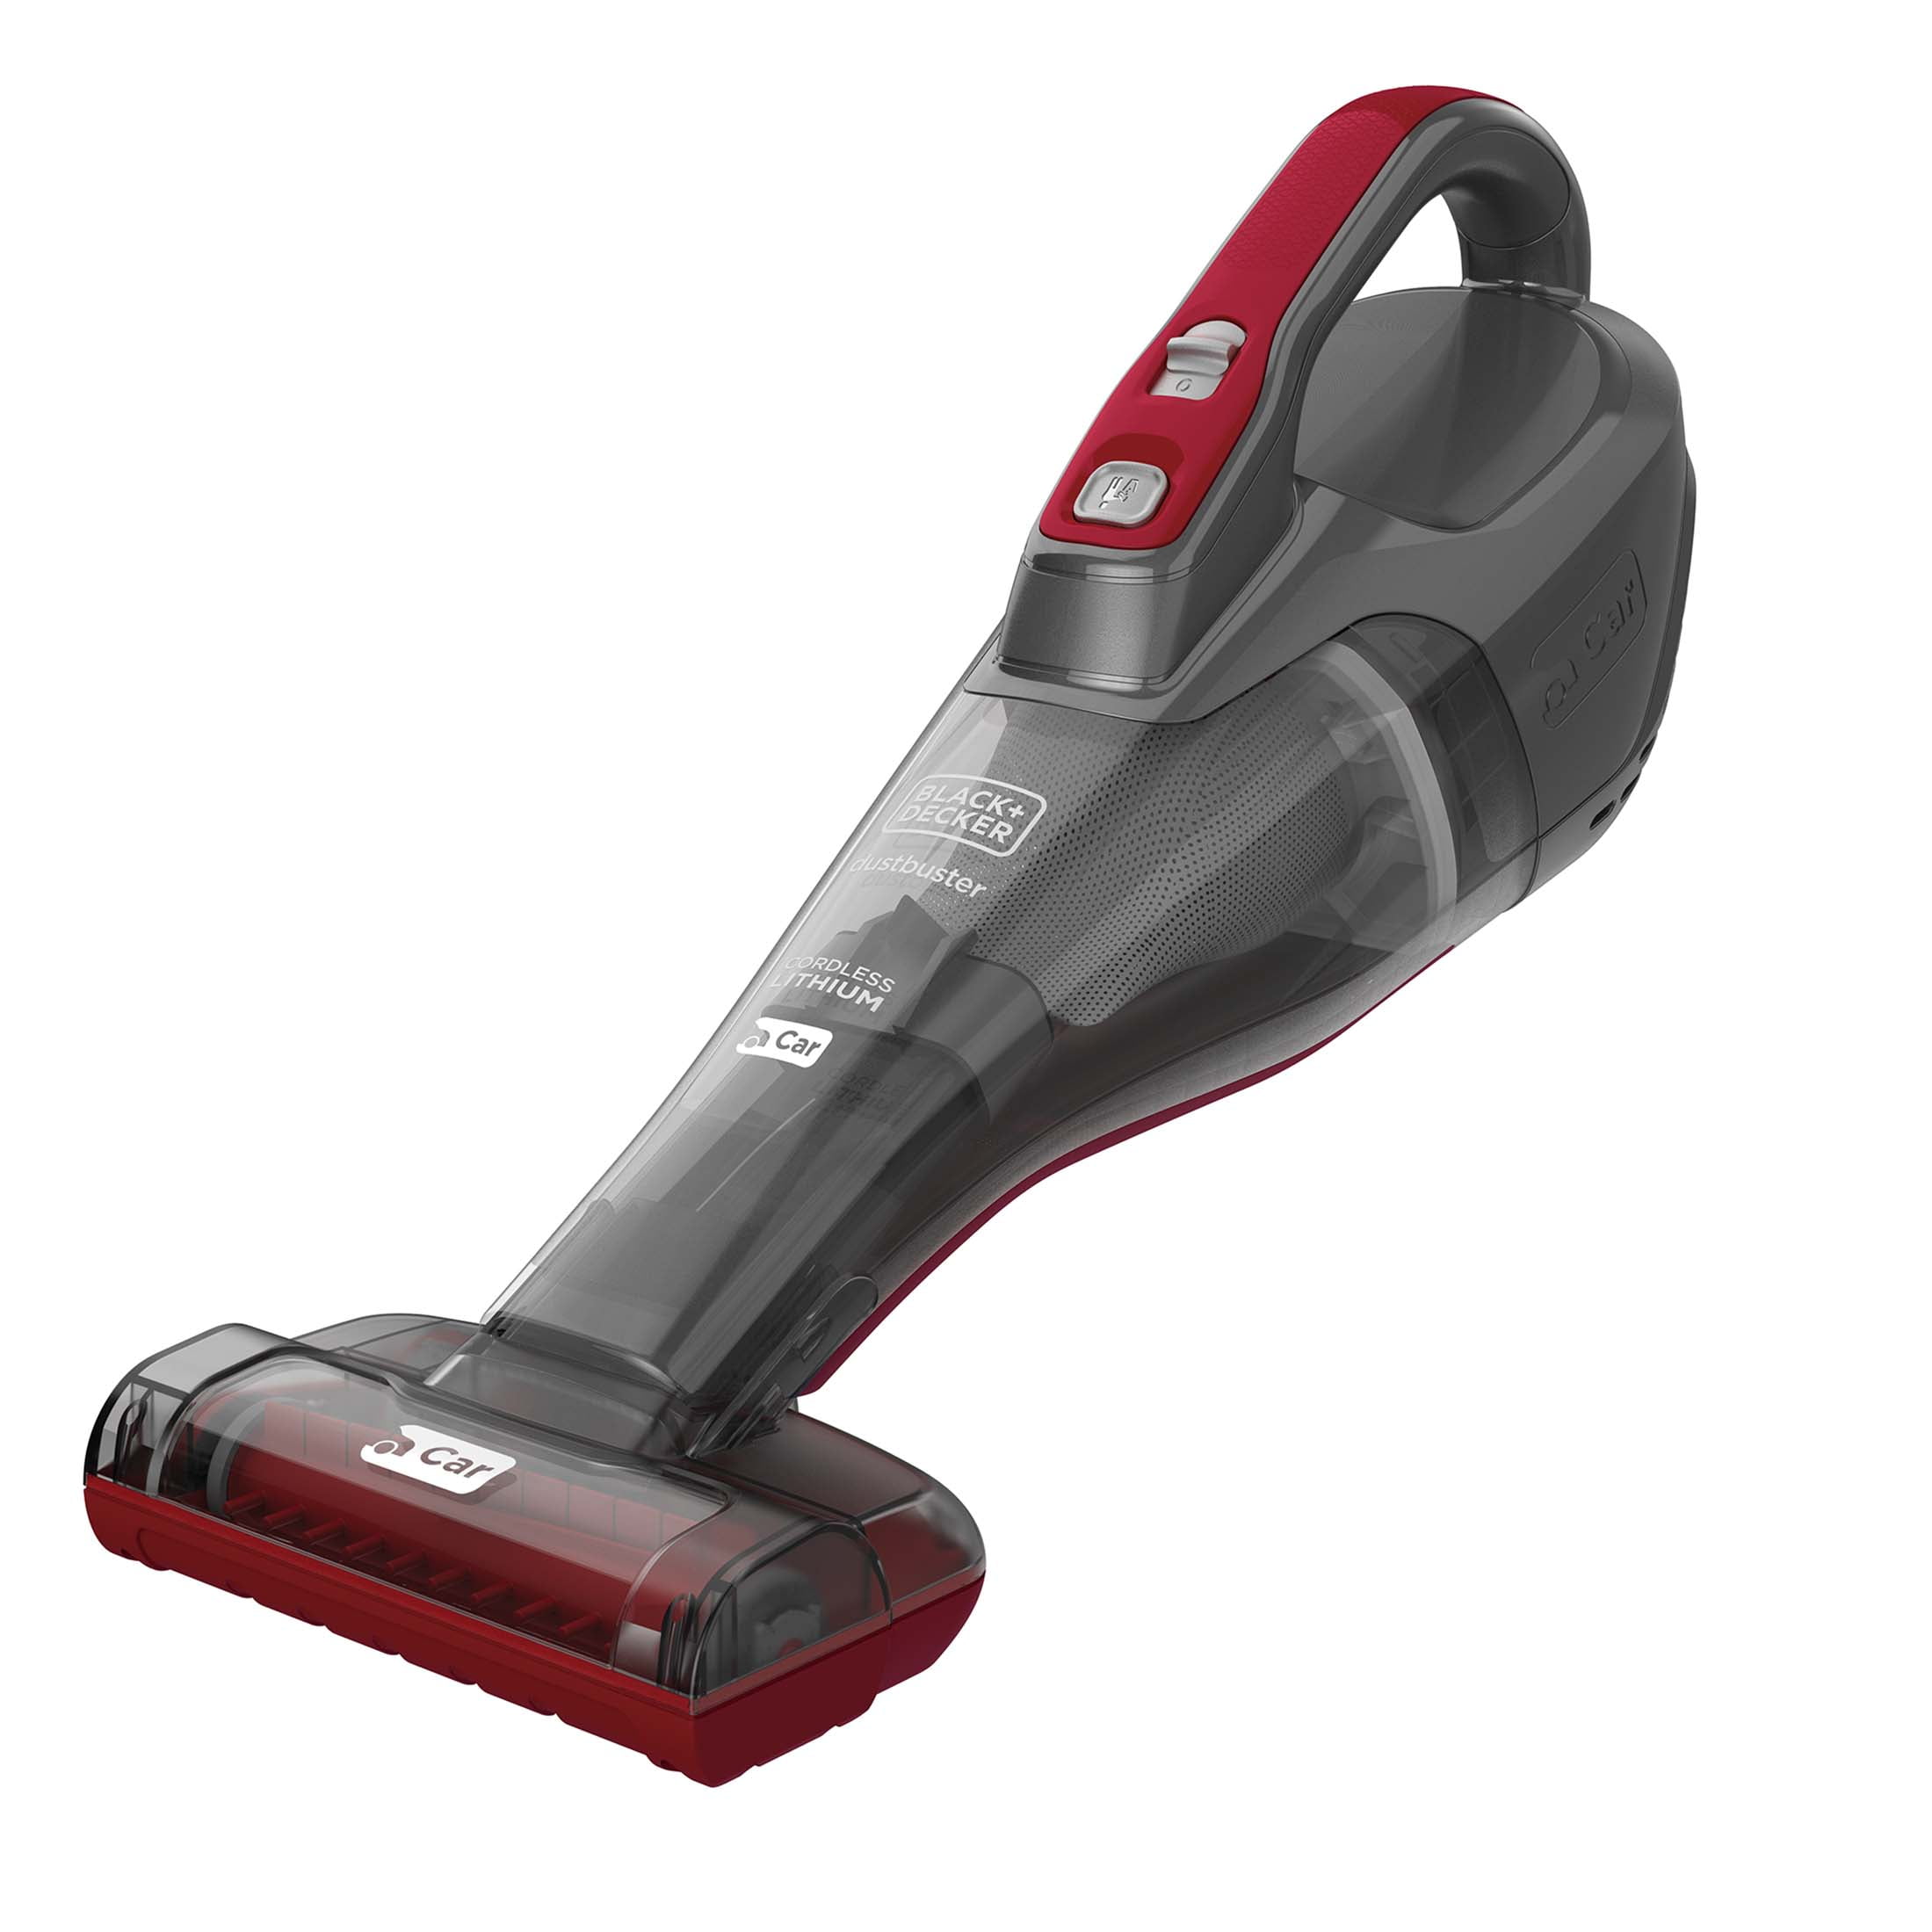 BLACK+DECKER dusbuster Handheld Vacuum for Car, Cordless, Gray (HLVB315JA26)